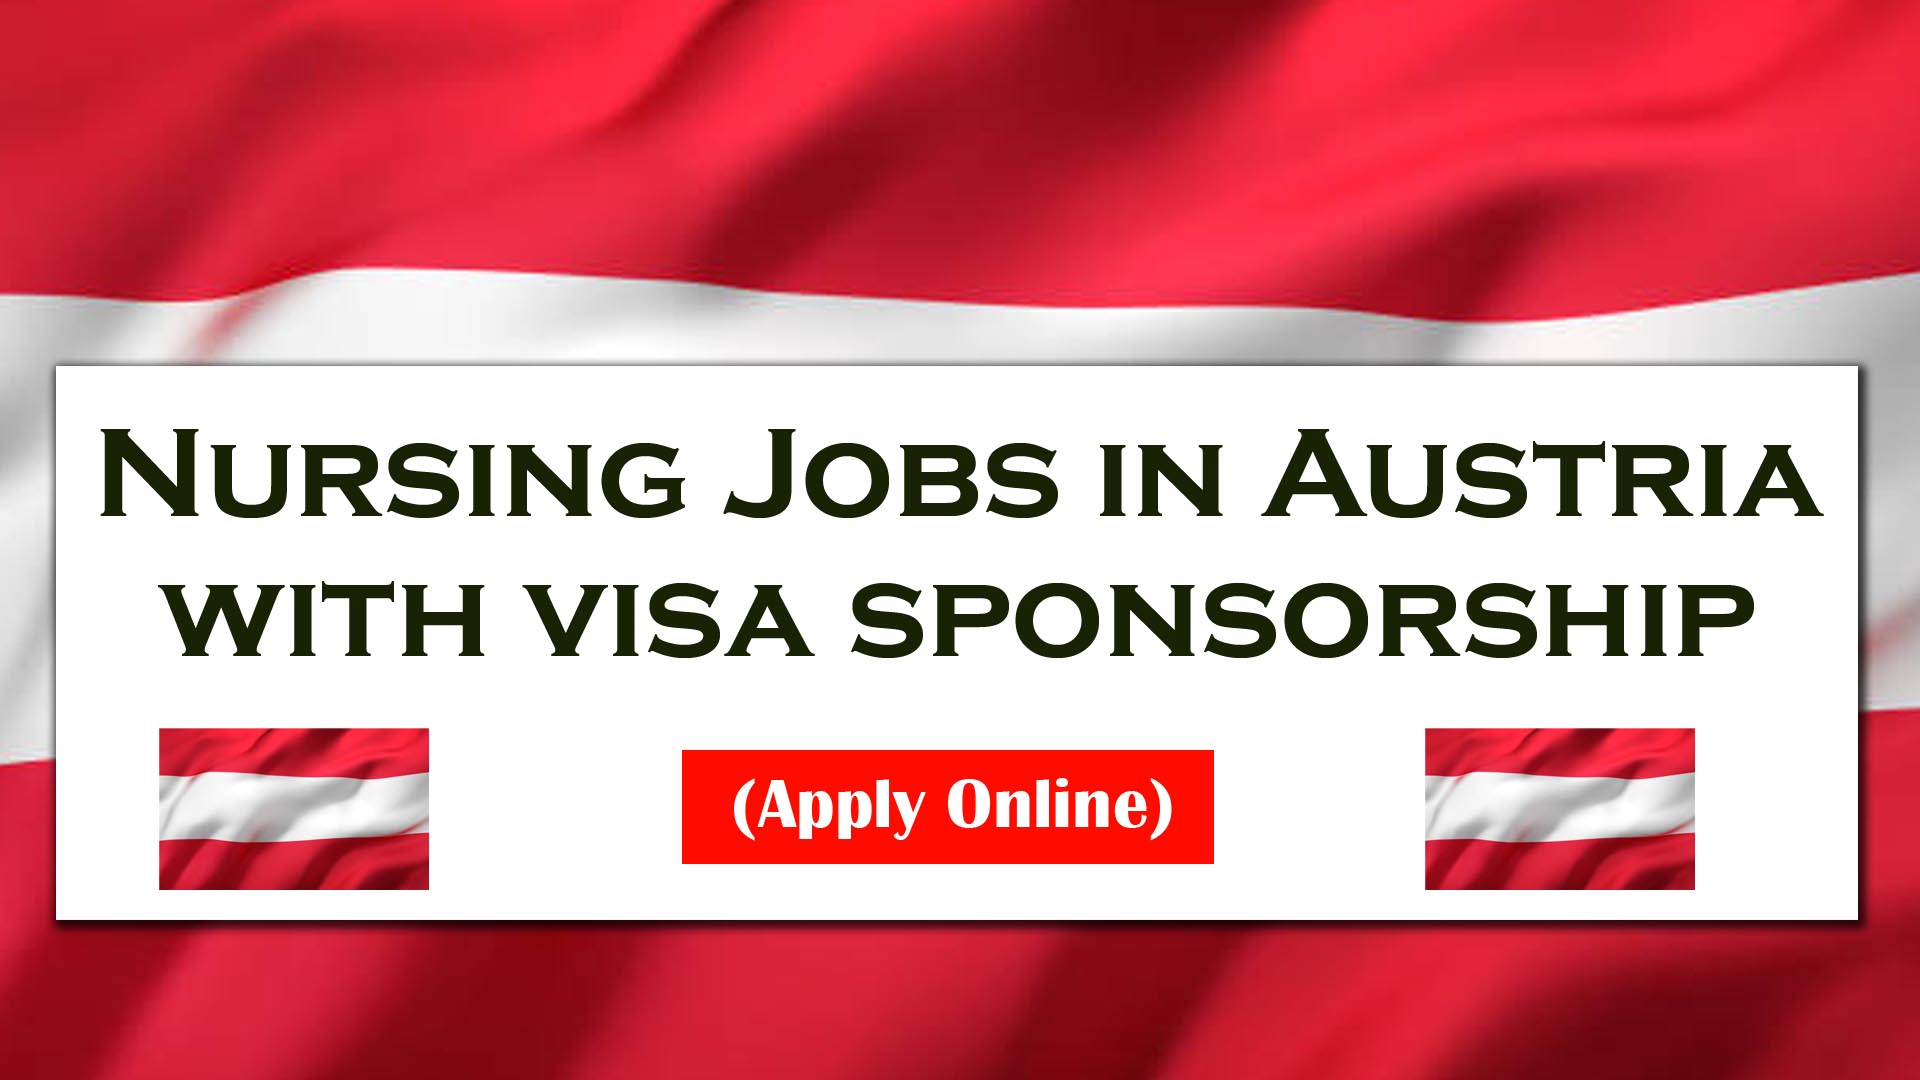 Nursing Jobs in Austria with visa sponsorship (Online Apply)